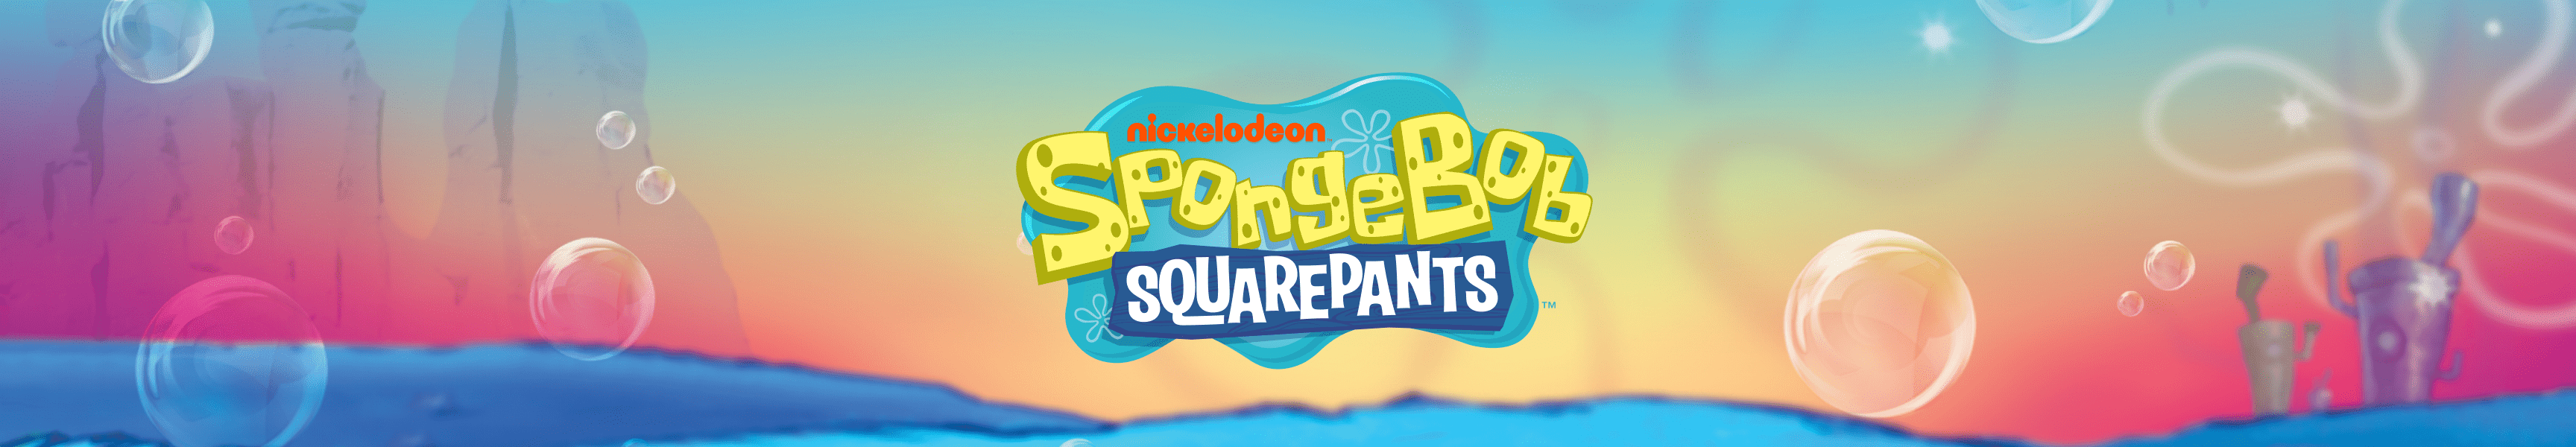 SpongeBob SquarePants Sweet Victory